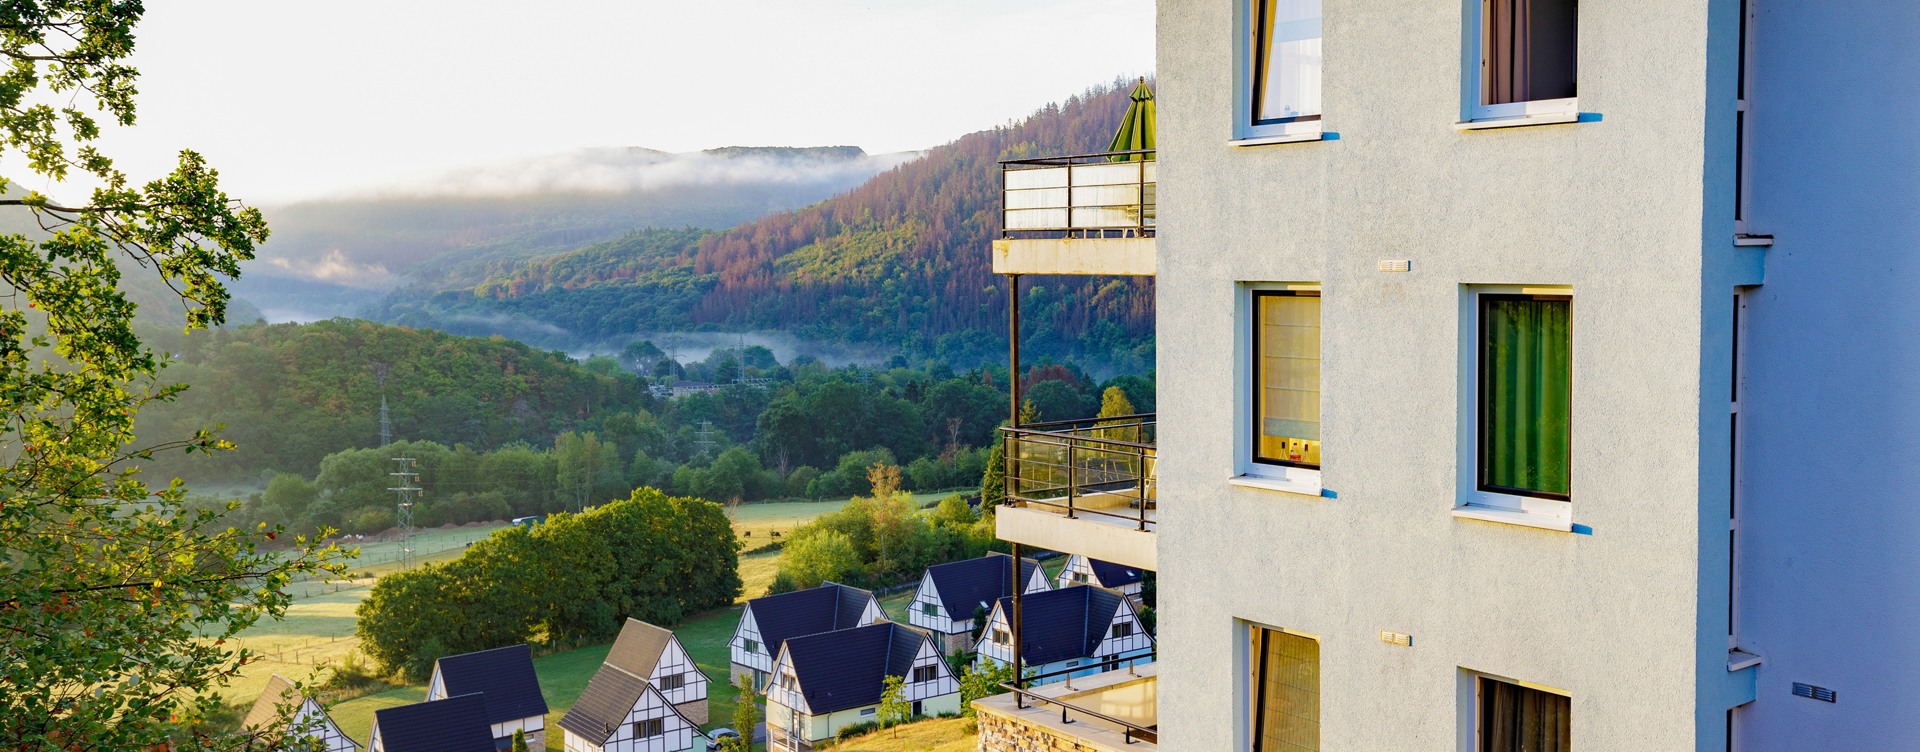 The best holiday park in the Eifel:
Dormio Resort Eifeler Tor